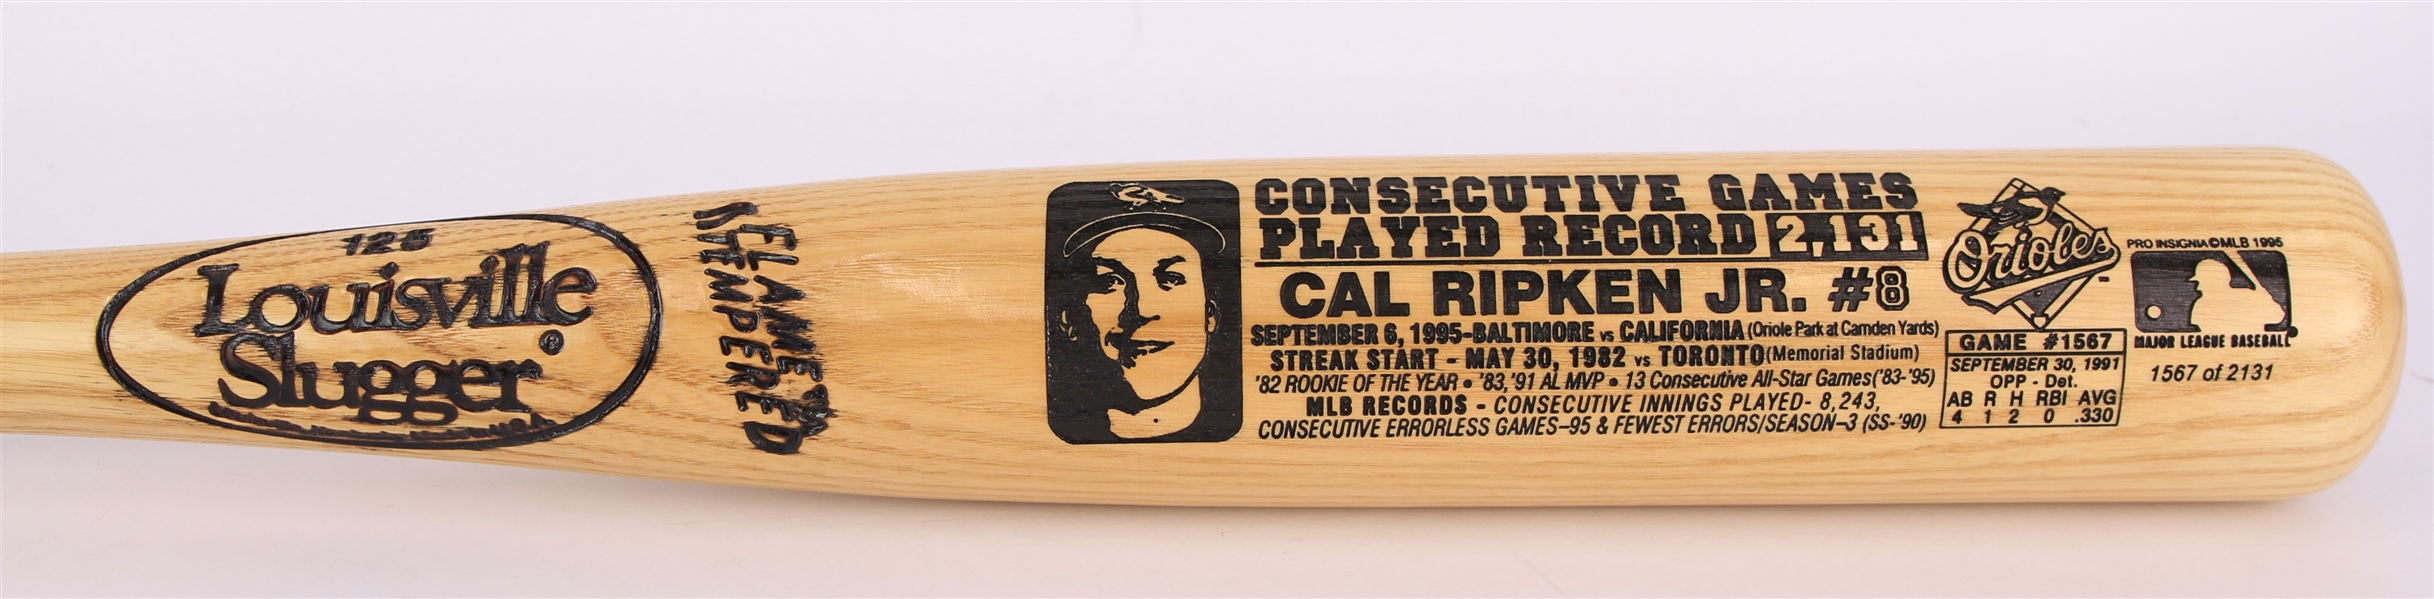 1991 Cal Ripken Jr. Baltimore Orioles Louisville Slugger Consecutive Game Played Record Commemorative Bat (1567/2131)